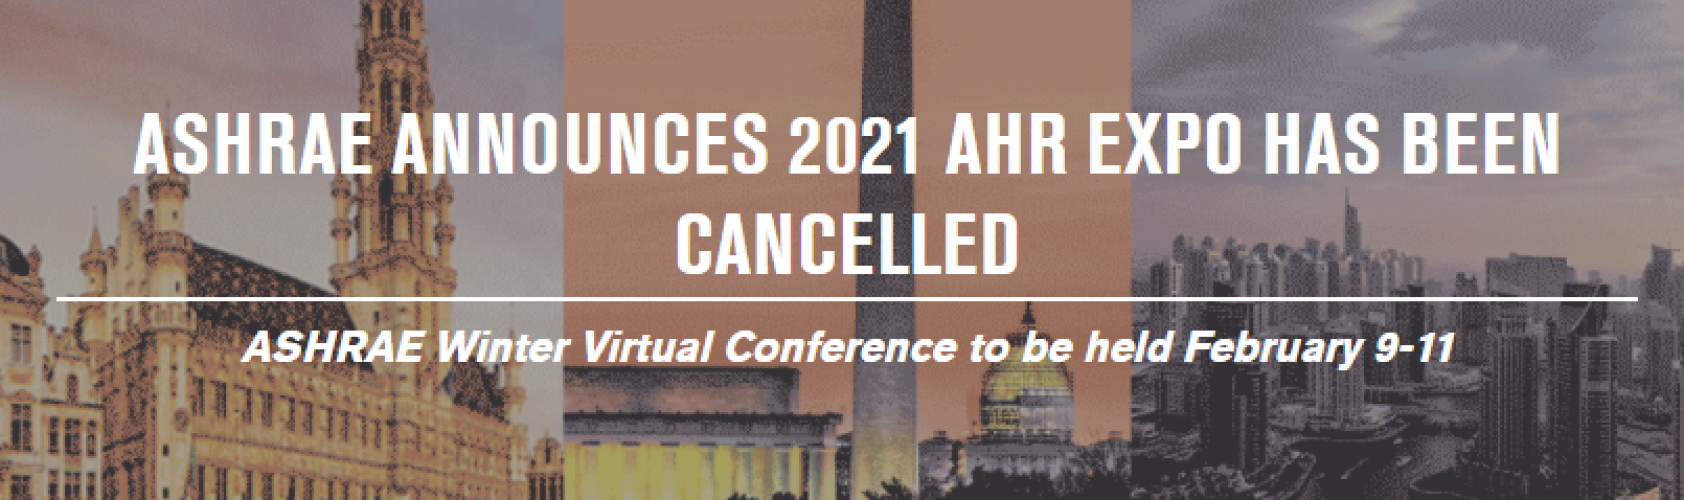 ASHRAE Announces 2021 AHR Expo Has Been Cancelled